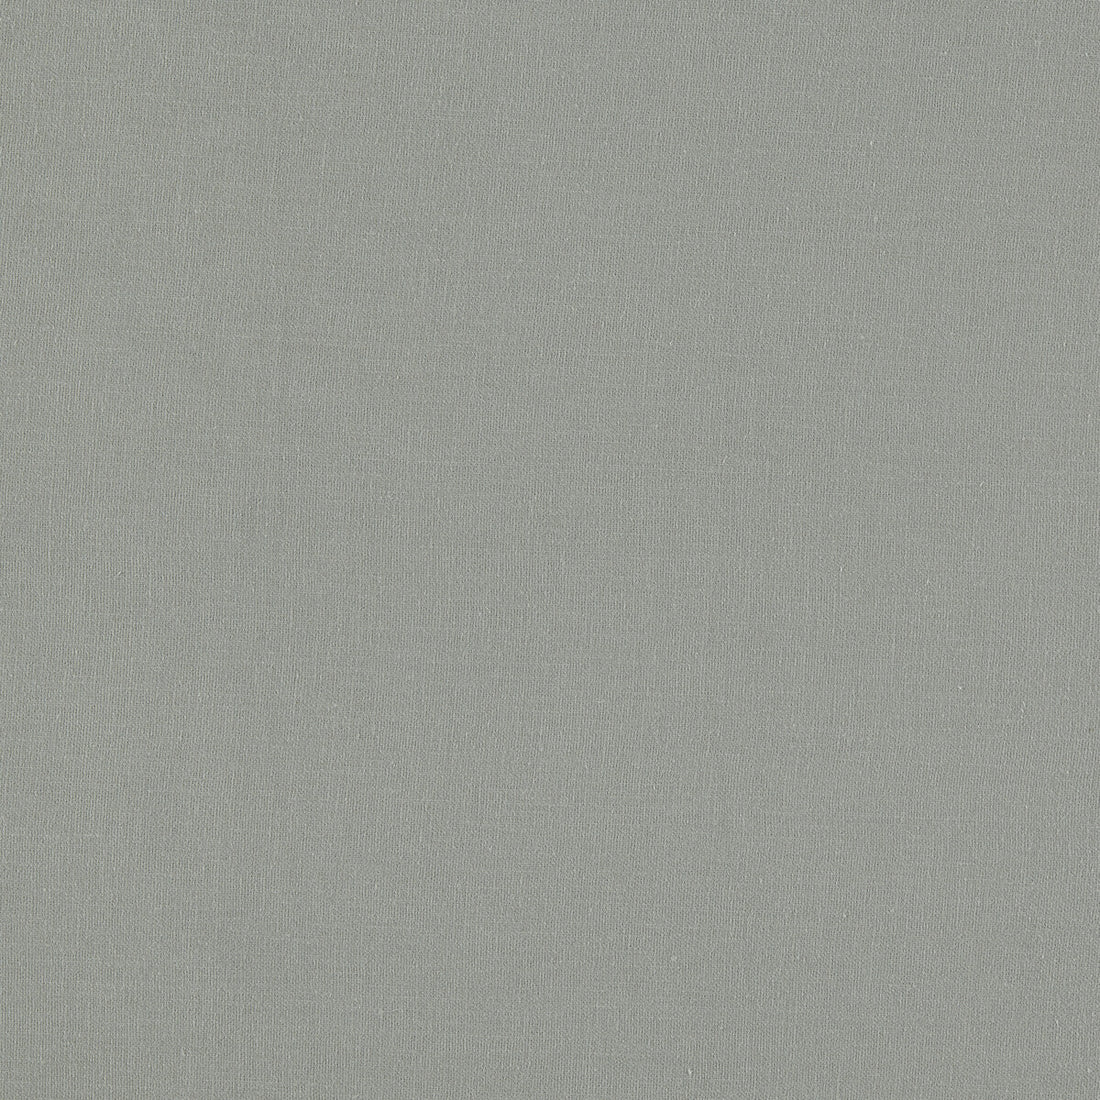 Lazio fabric in ash color - pattern F1537/02.CAC.0 - by Clarke And Clarke in the Clarke &amp; Clarke Lazio collection